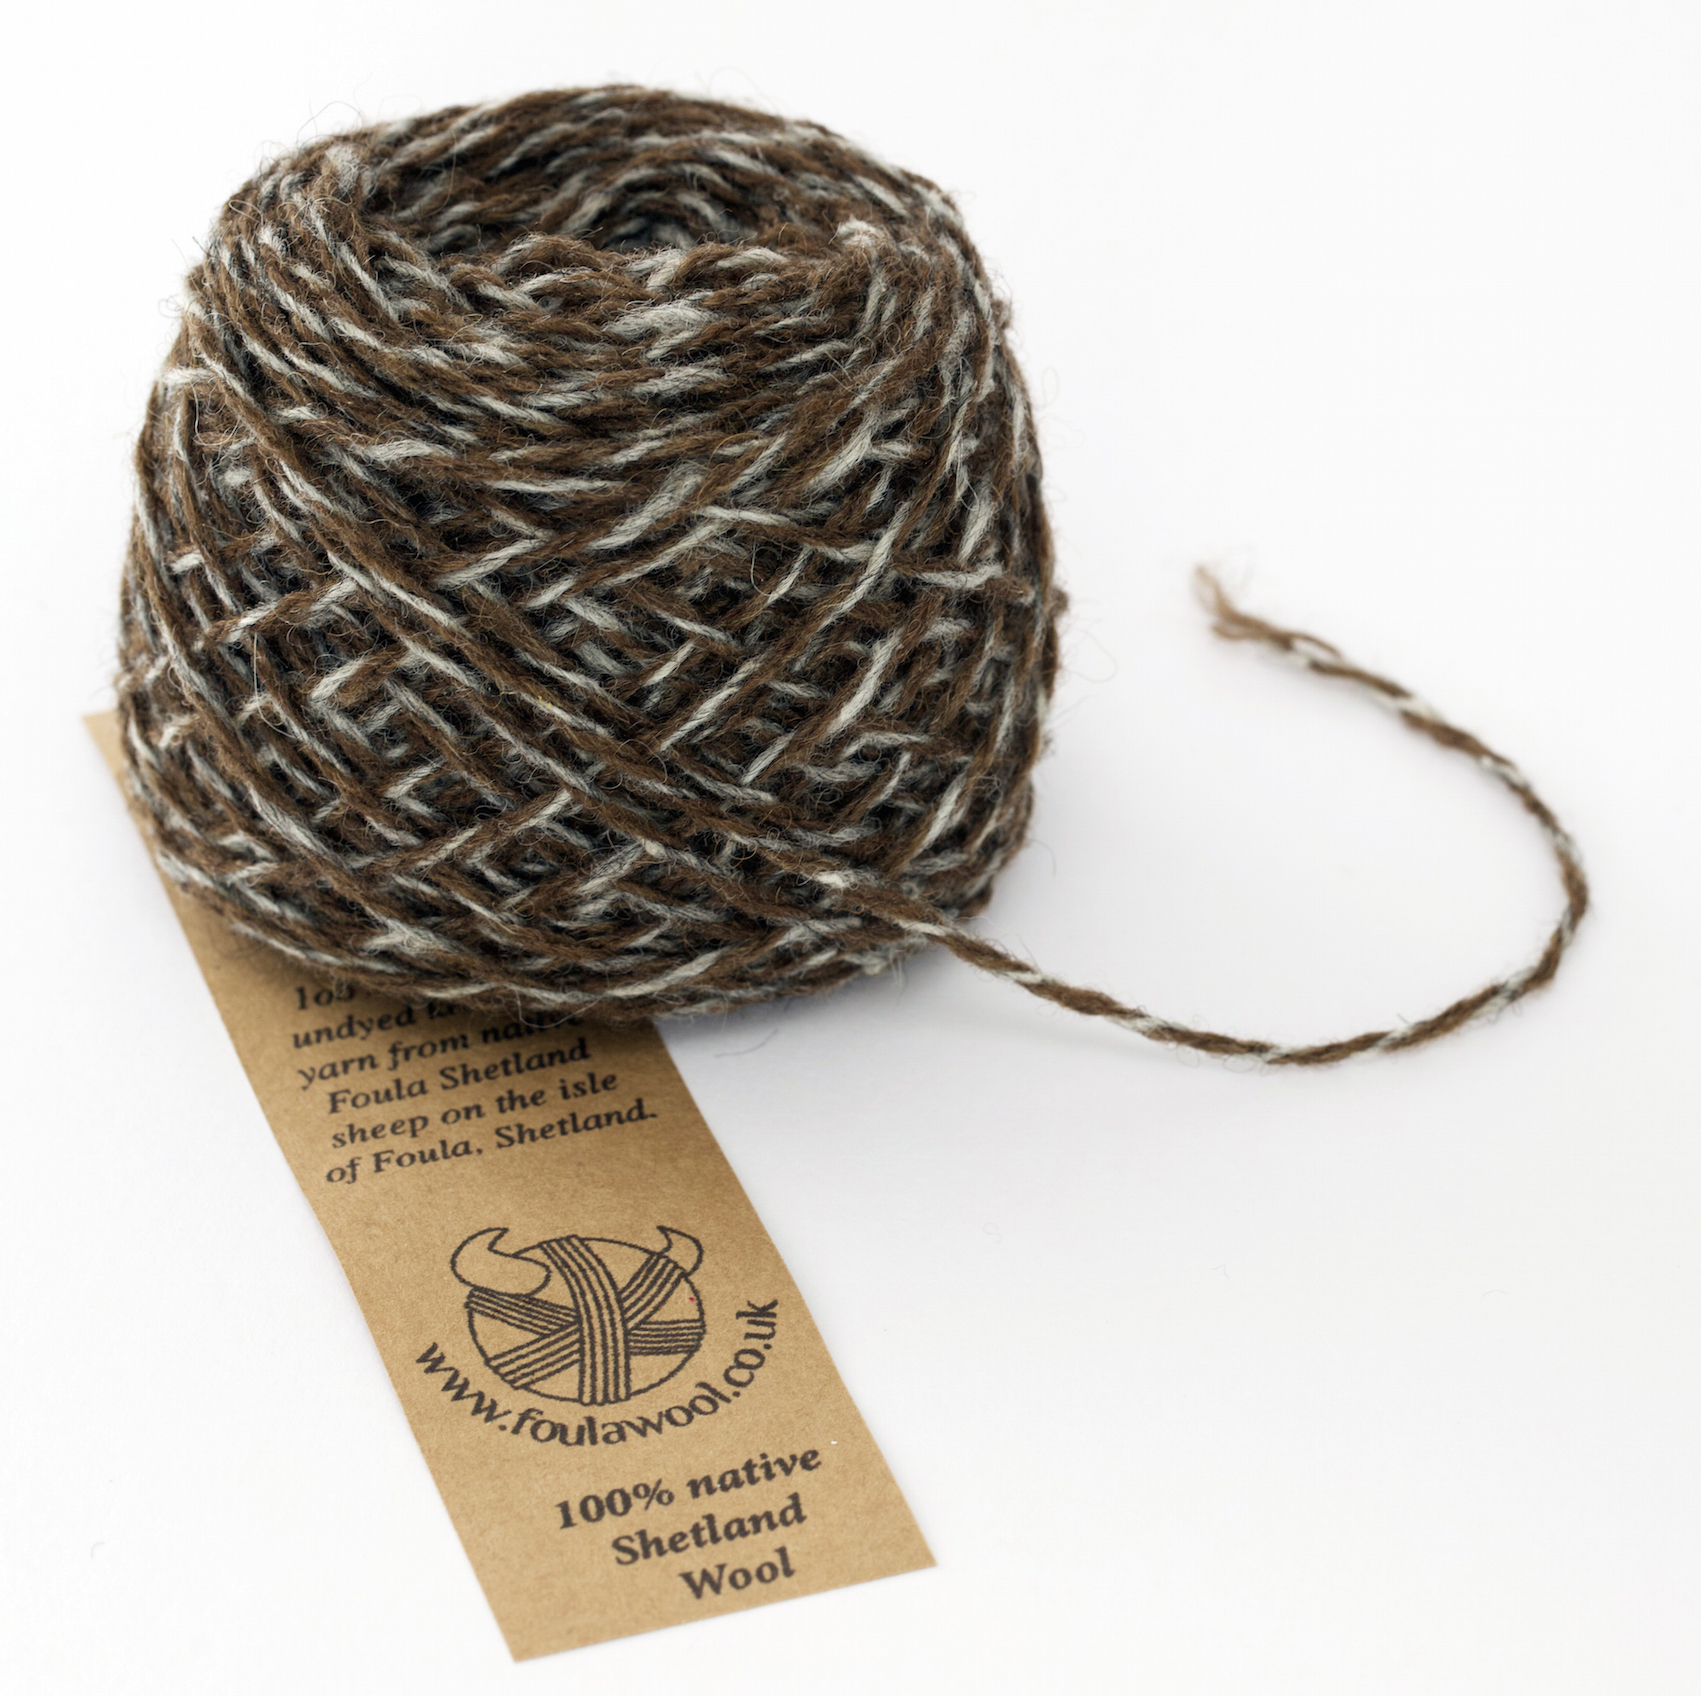 25g 2moorit/1grey yarn ball